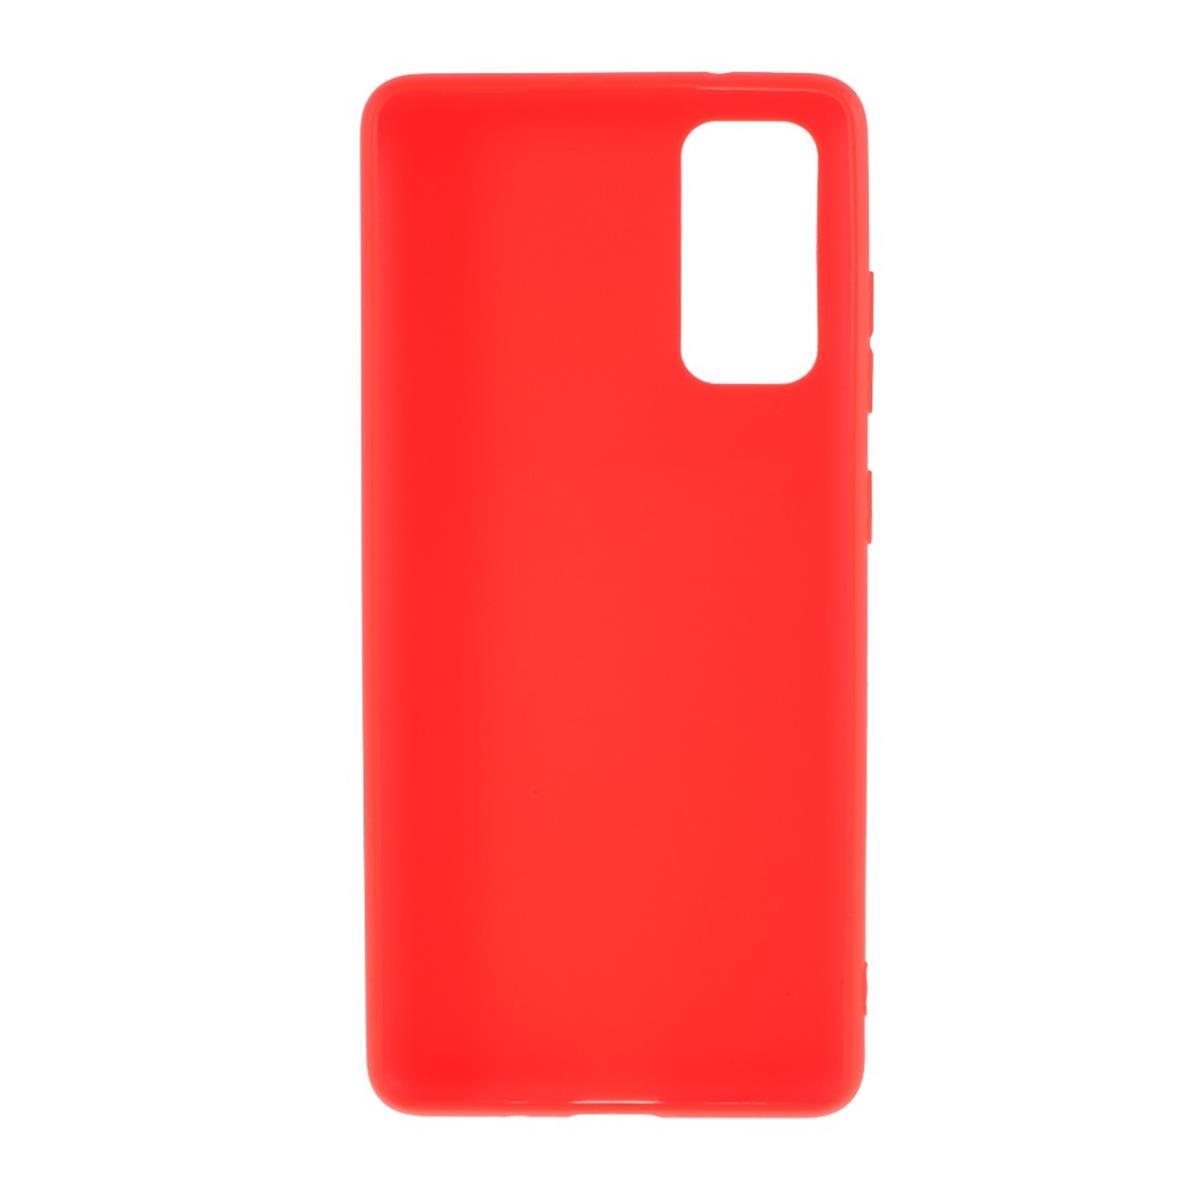 Hülle für Samsung Galaxy S20 FE Handyhülle Silikon Case Cover Schutzhülle Tasche Matt Rot